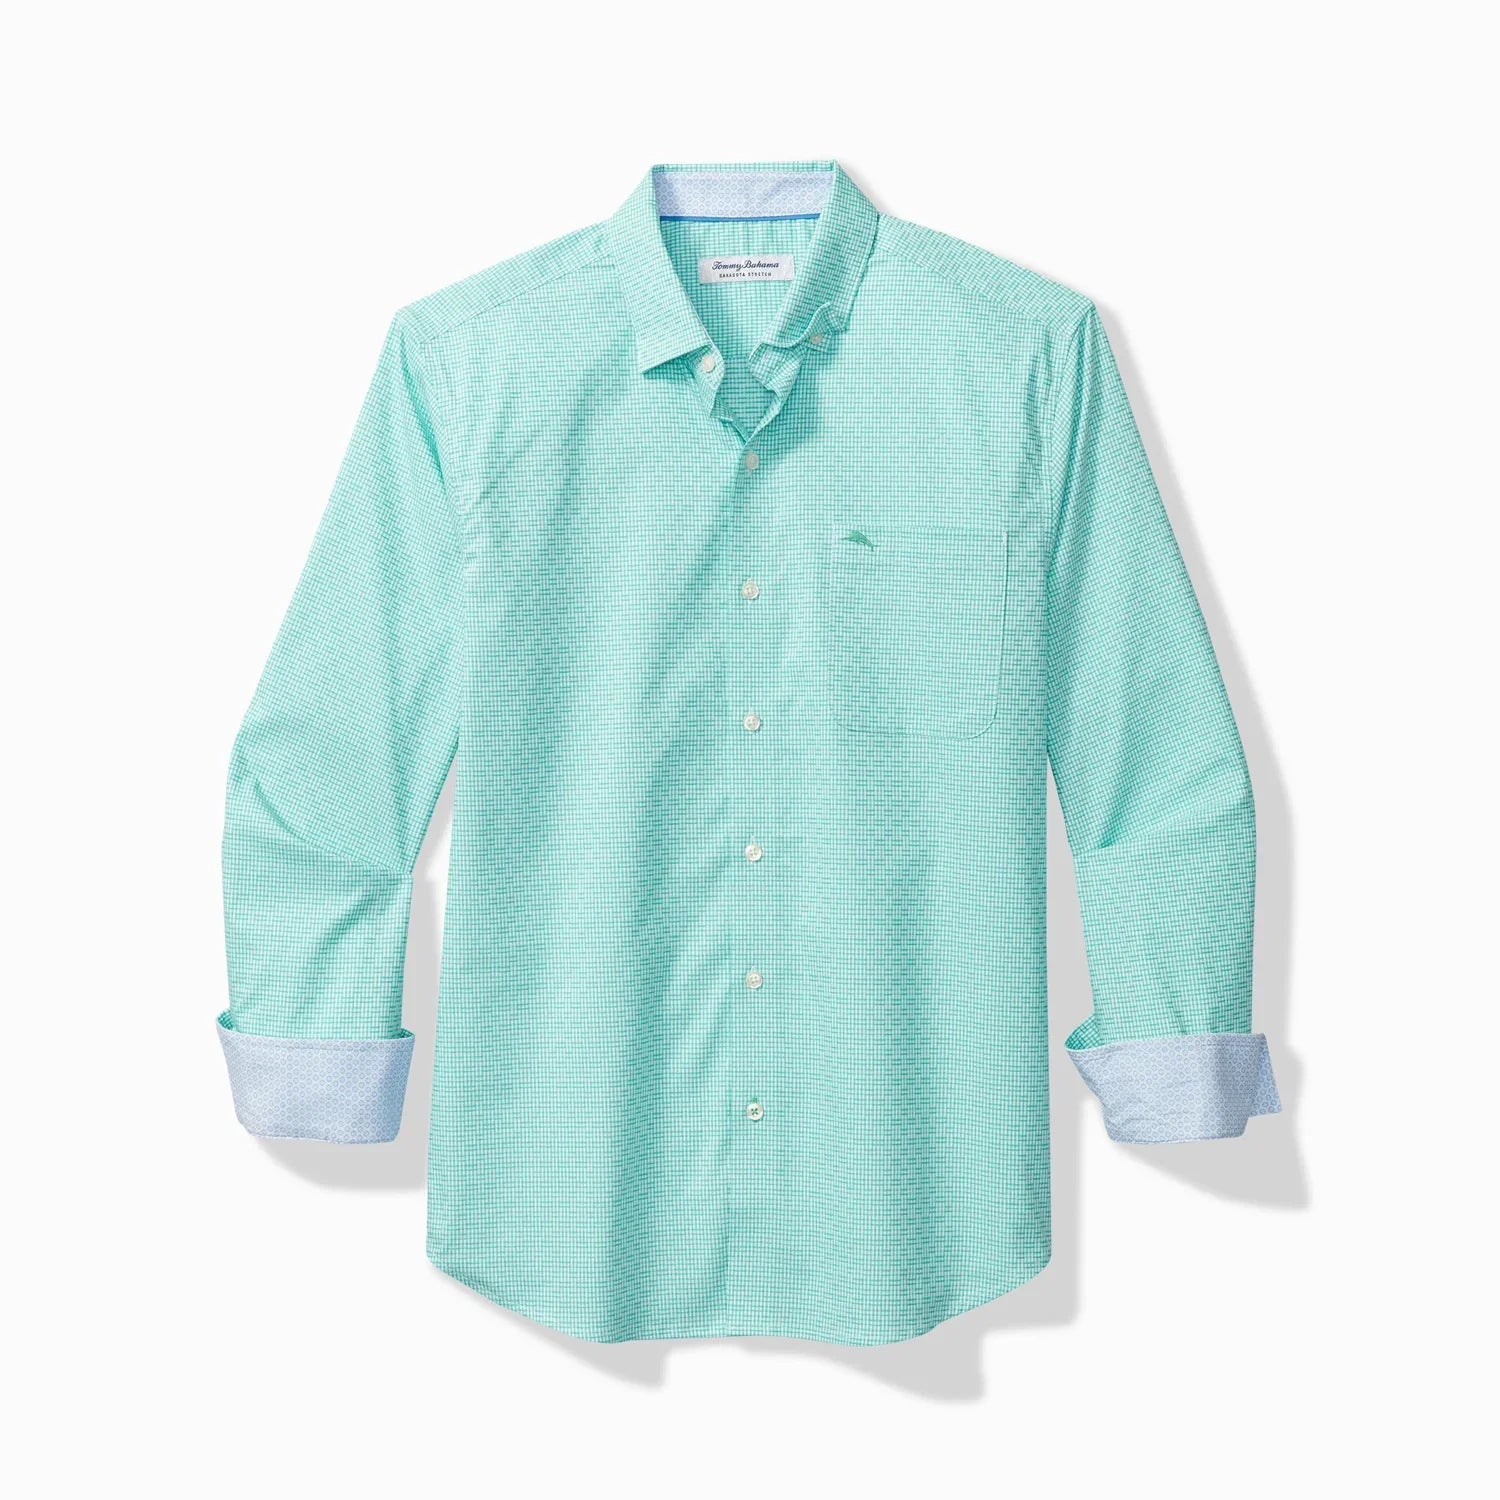 'Tommy Bahama Sarasota Stretch Ventura Isles IslandZone Stripe Shirt' in 'Kohala Teal' colour